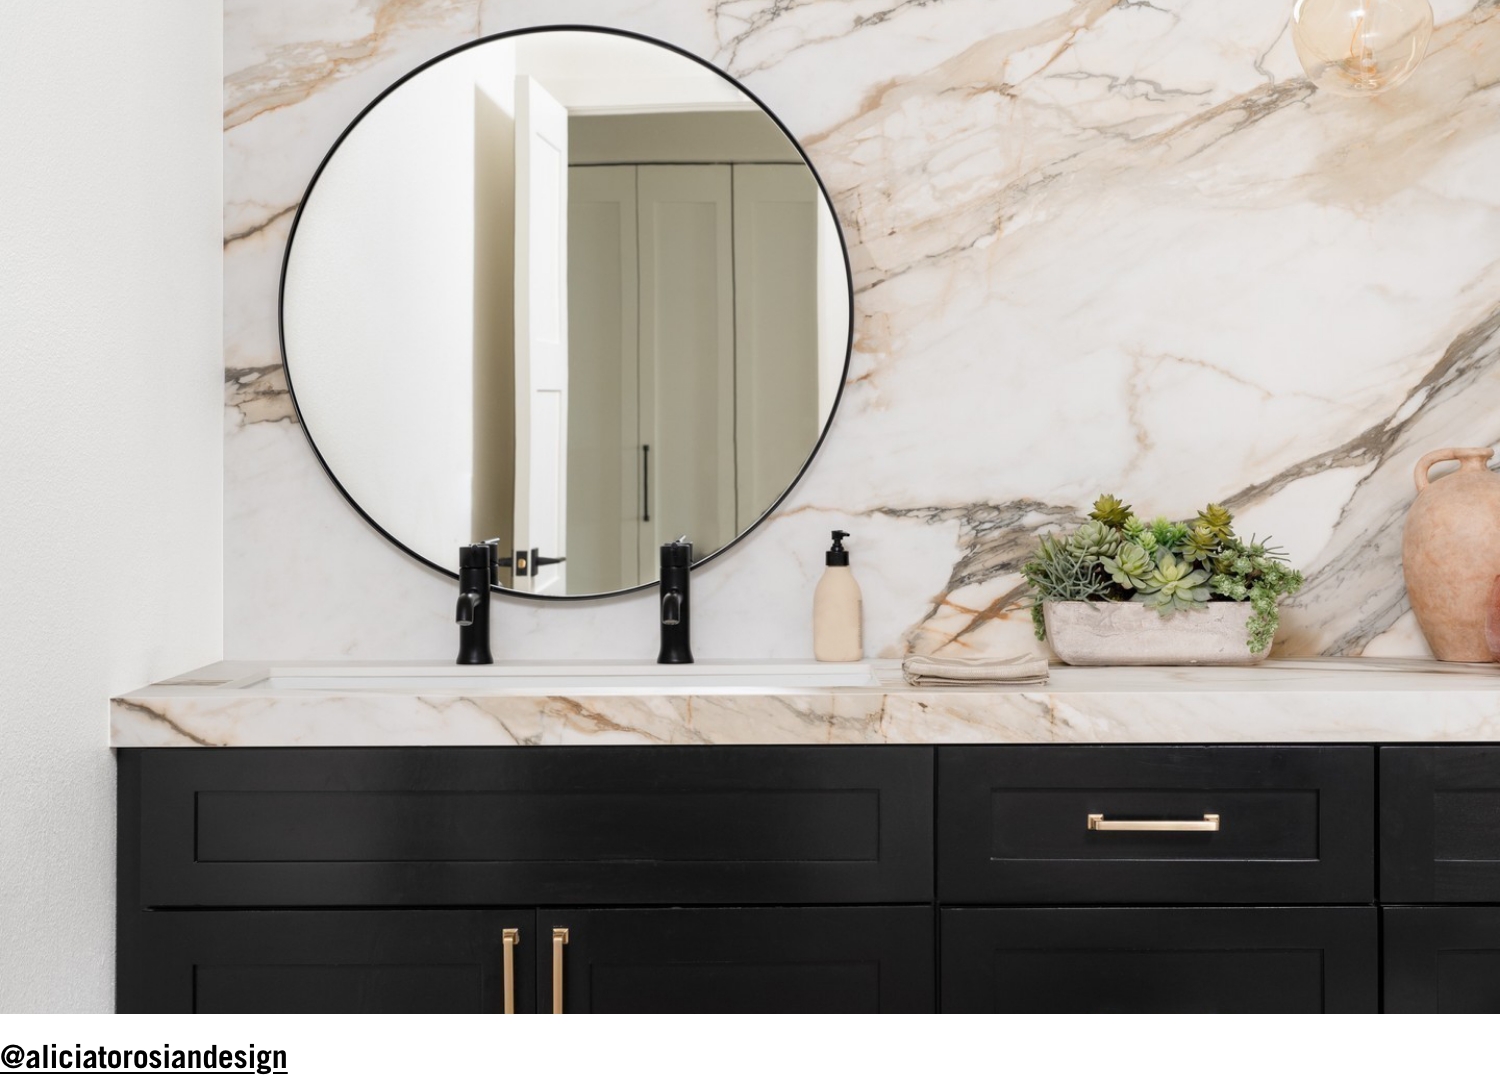 aliciatorosiandesign's bathroom vanity